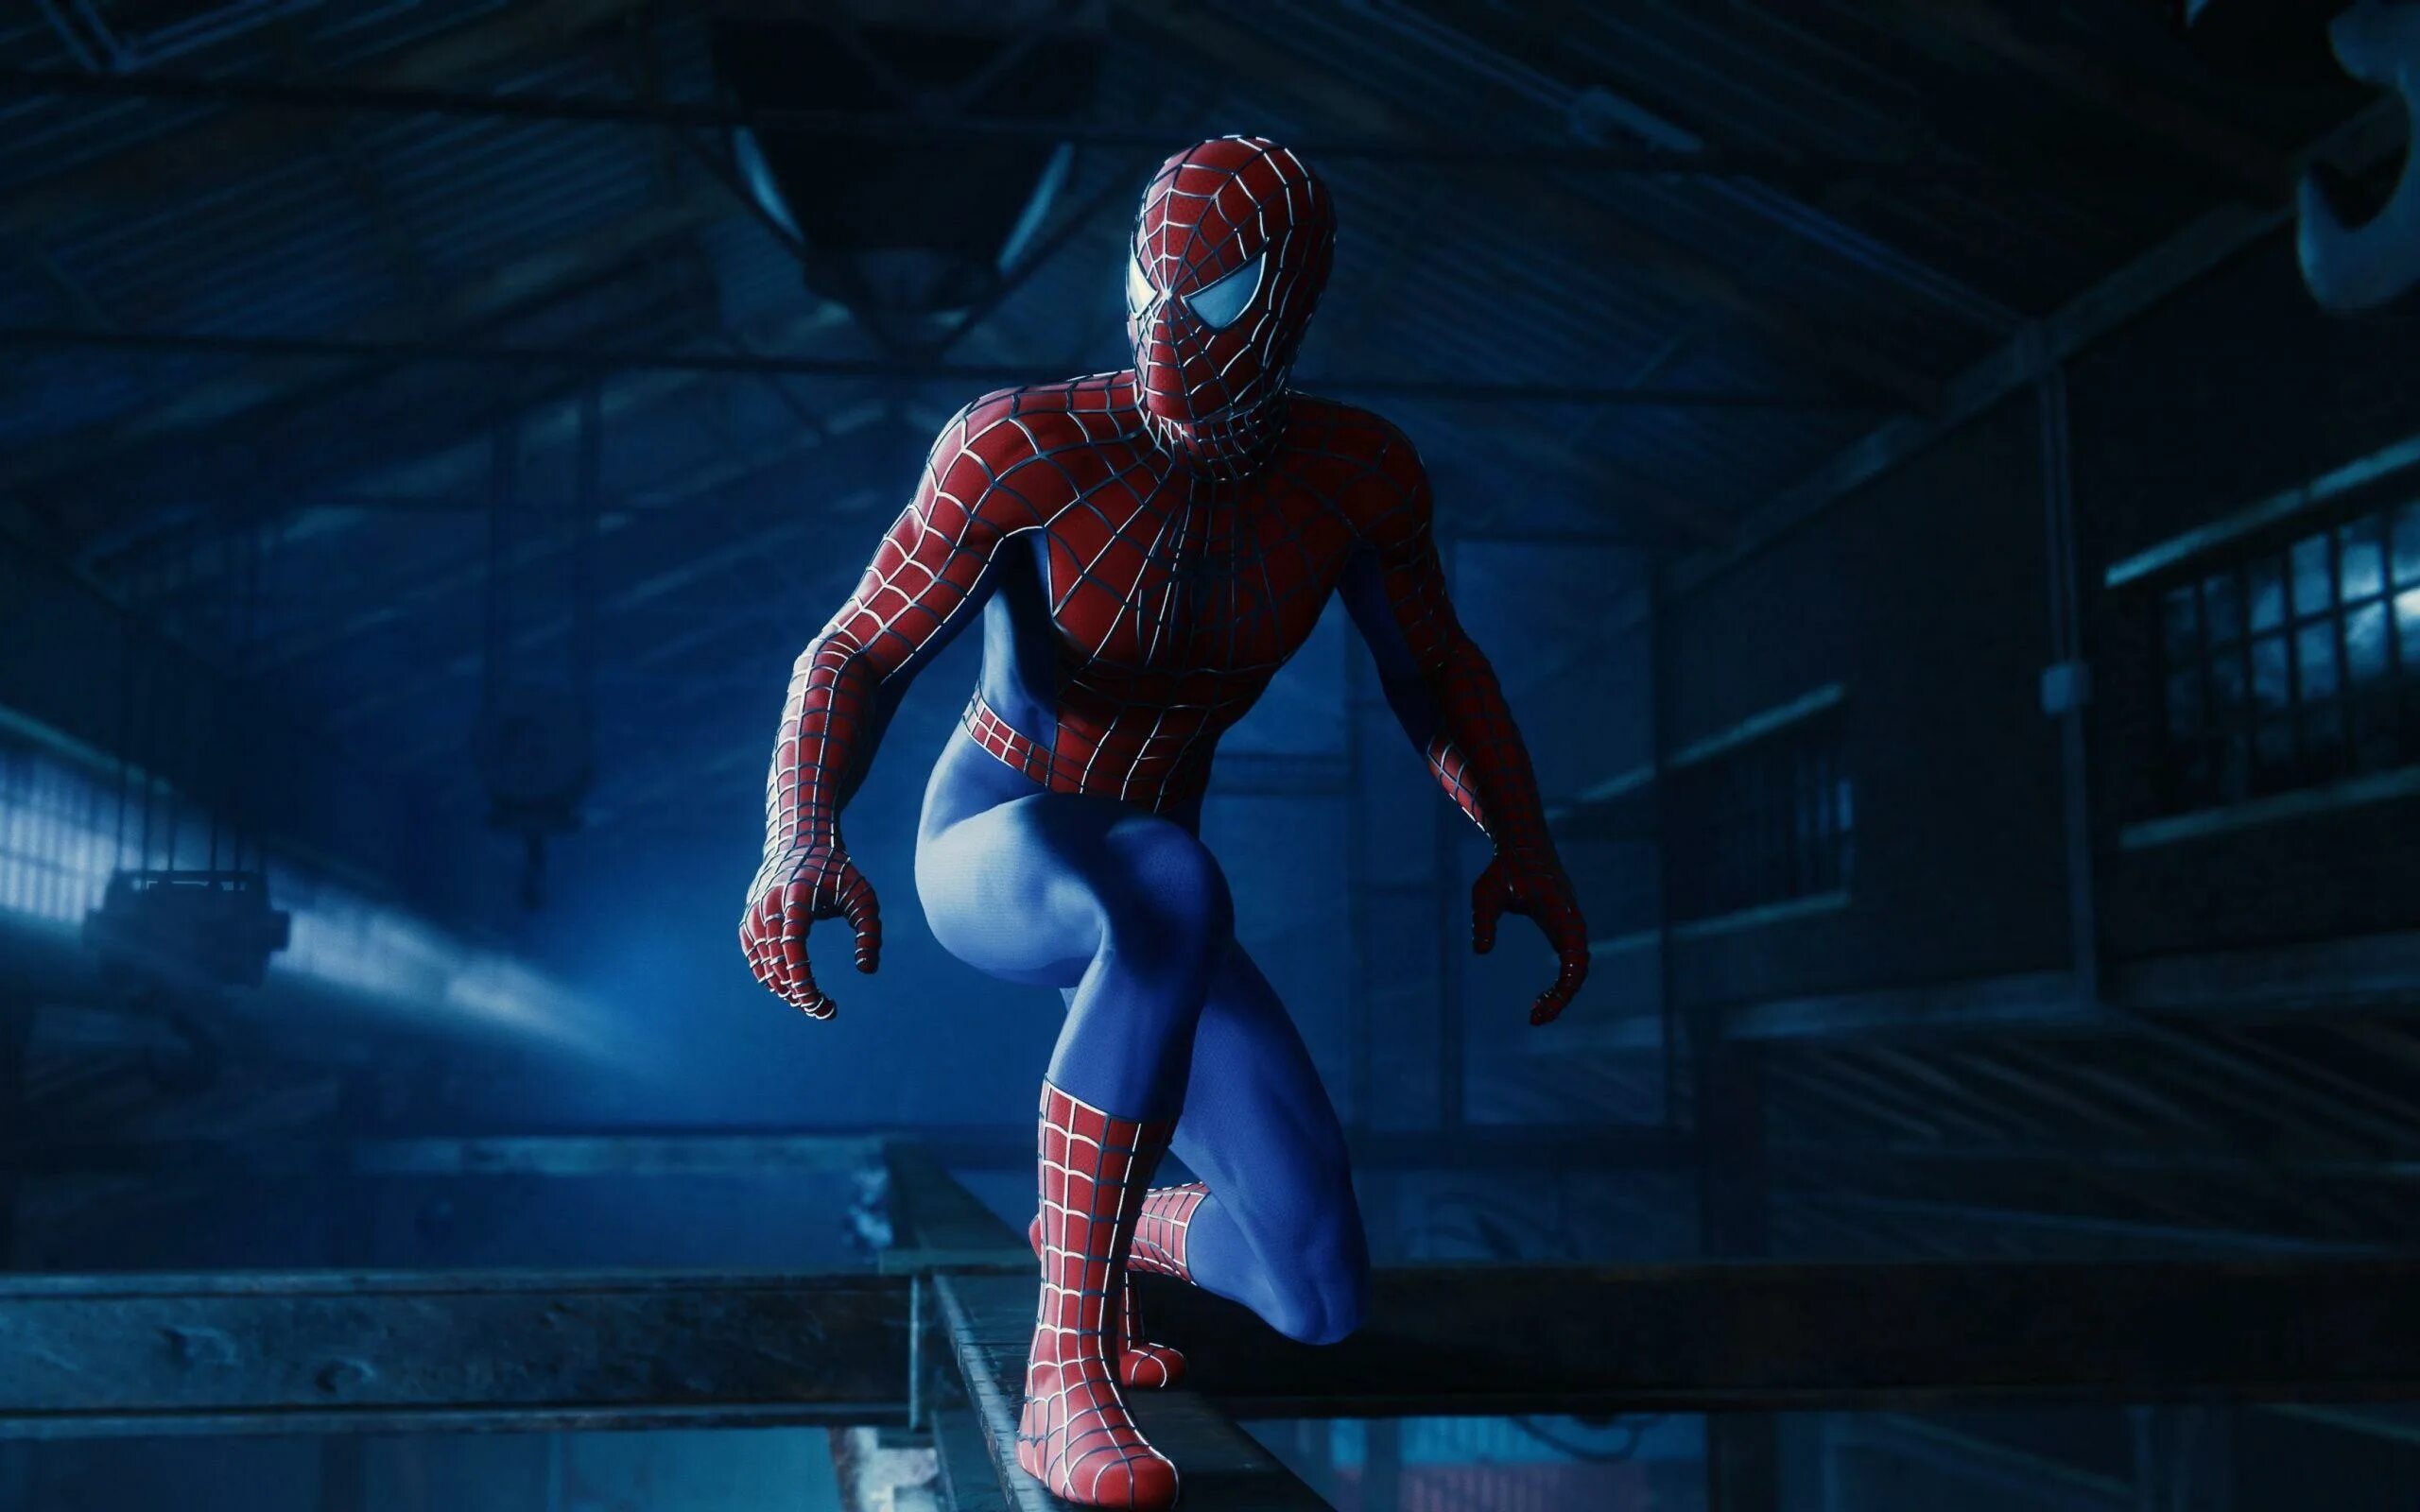 Sophie rain spiderman full. Spider-man (игра, 2018). Spider-man 4 (игра, 2016). Амонг АС человек паук. Человек паук игра 2018.